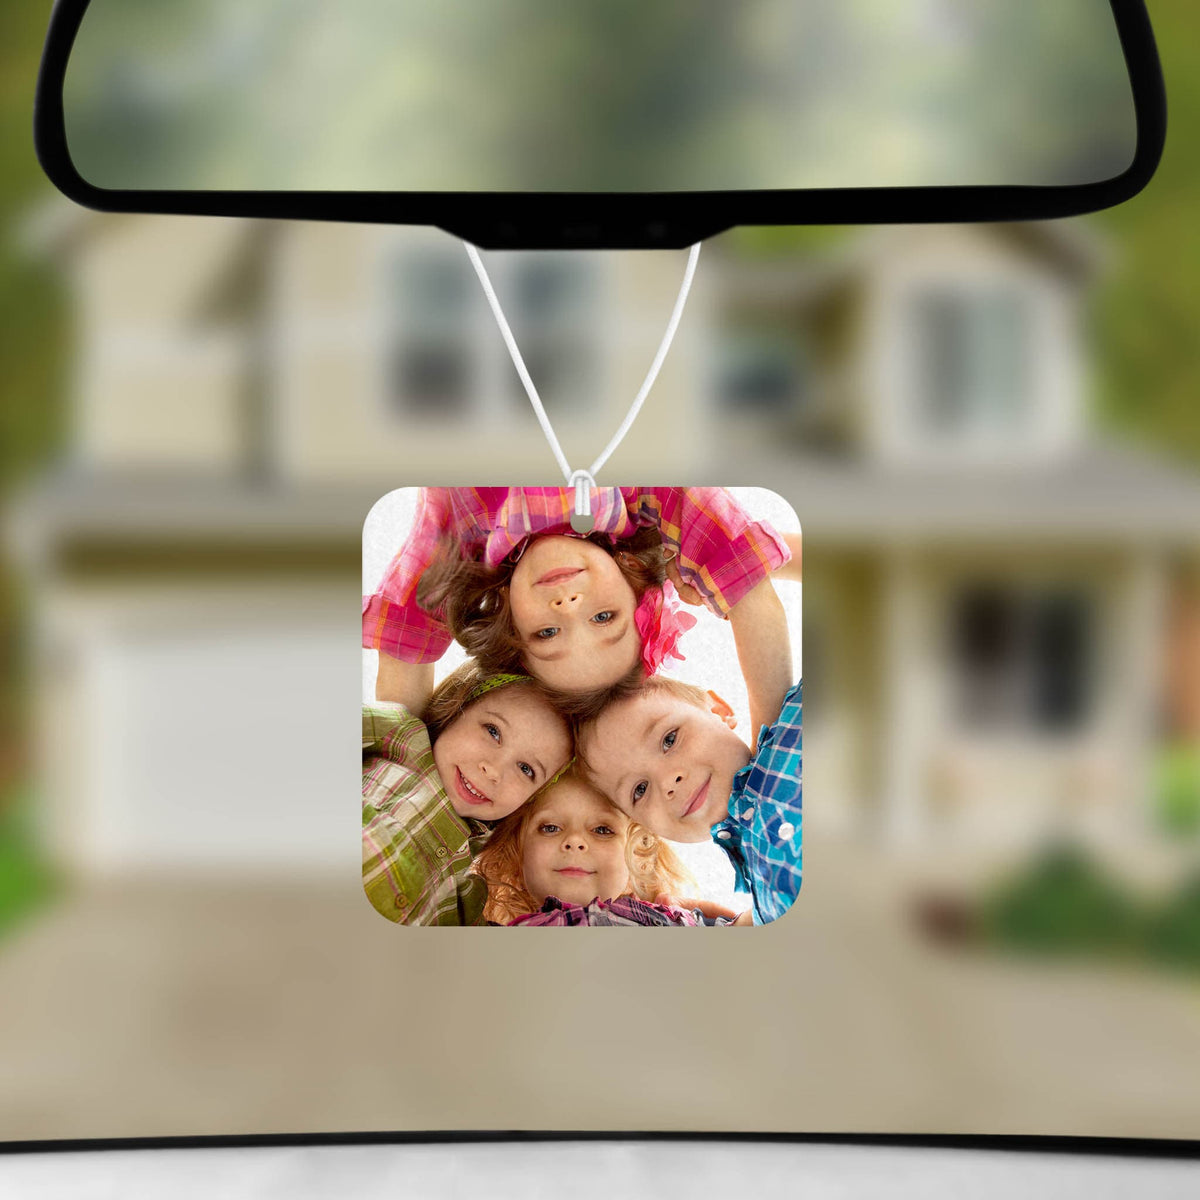 Personalized Air Fresheners | Set of 2 | Custom Car Accessories | Custom Photo Family